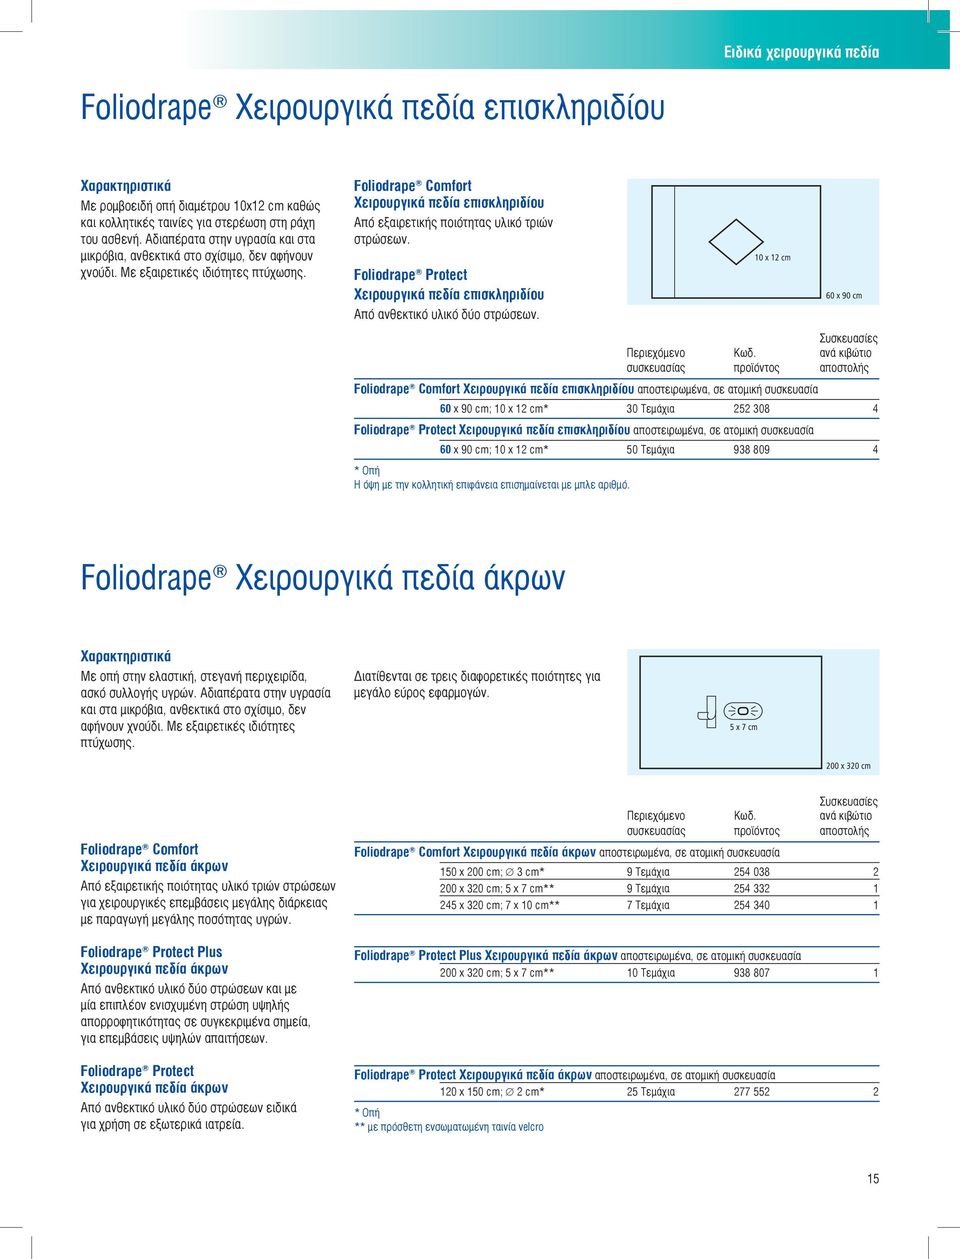 Foliodrape Protect Χειρουργικά πεδία επισκληριδίου Από ανθεκτικό υλικό δύο στρώσεων.